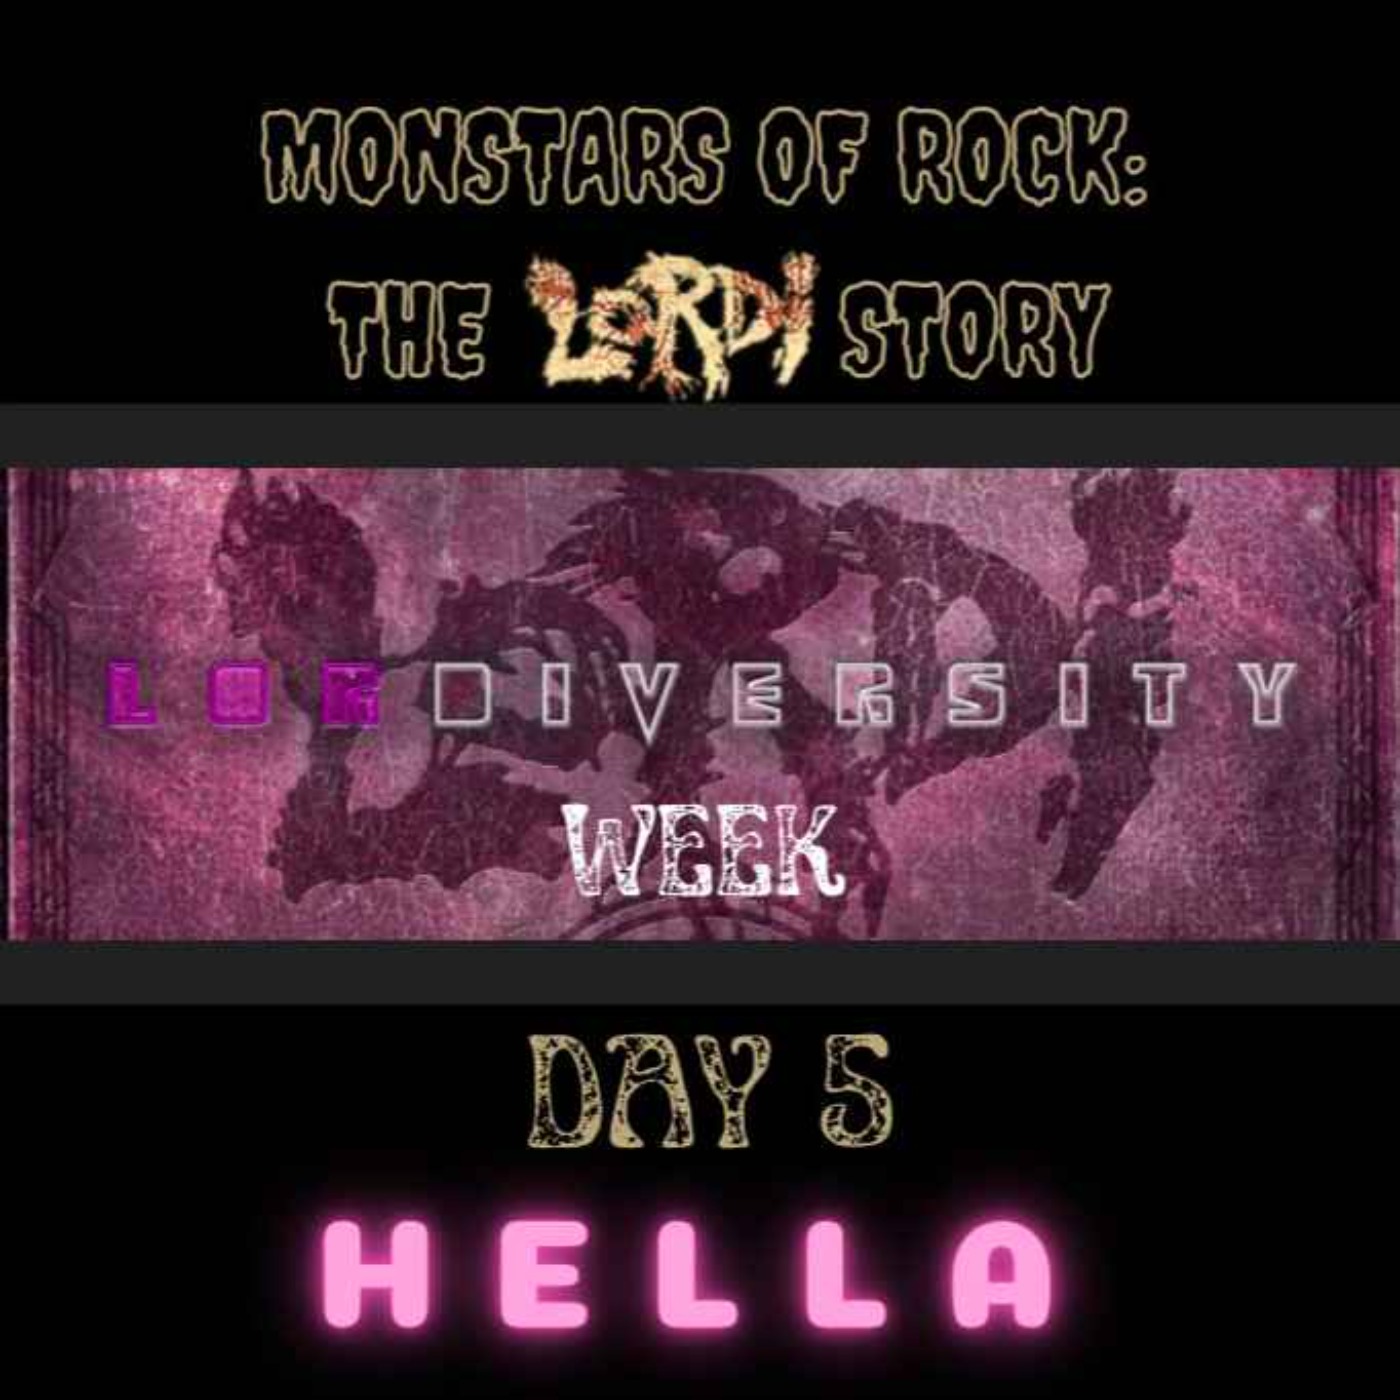 Hella - DAY 5 of LORDIVERSITY WEEK